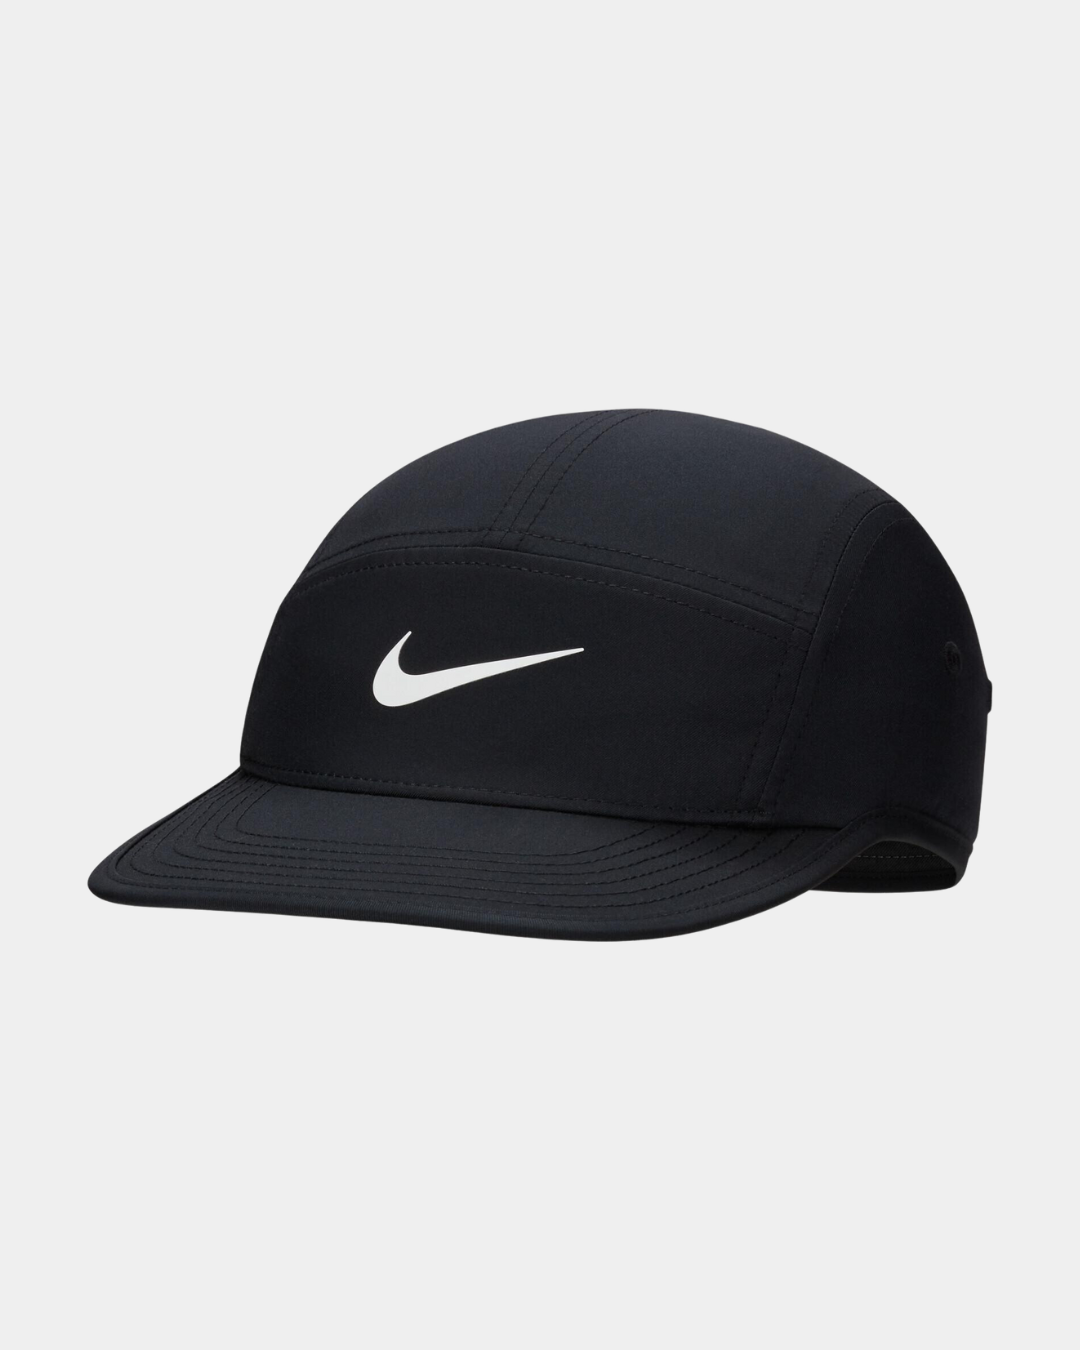 Nike Dri-Fit Fly Cap - Black/White